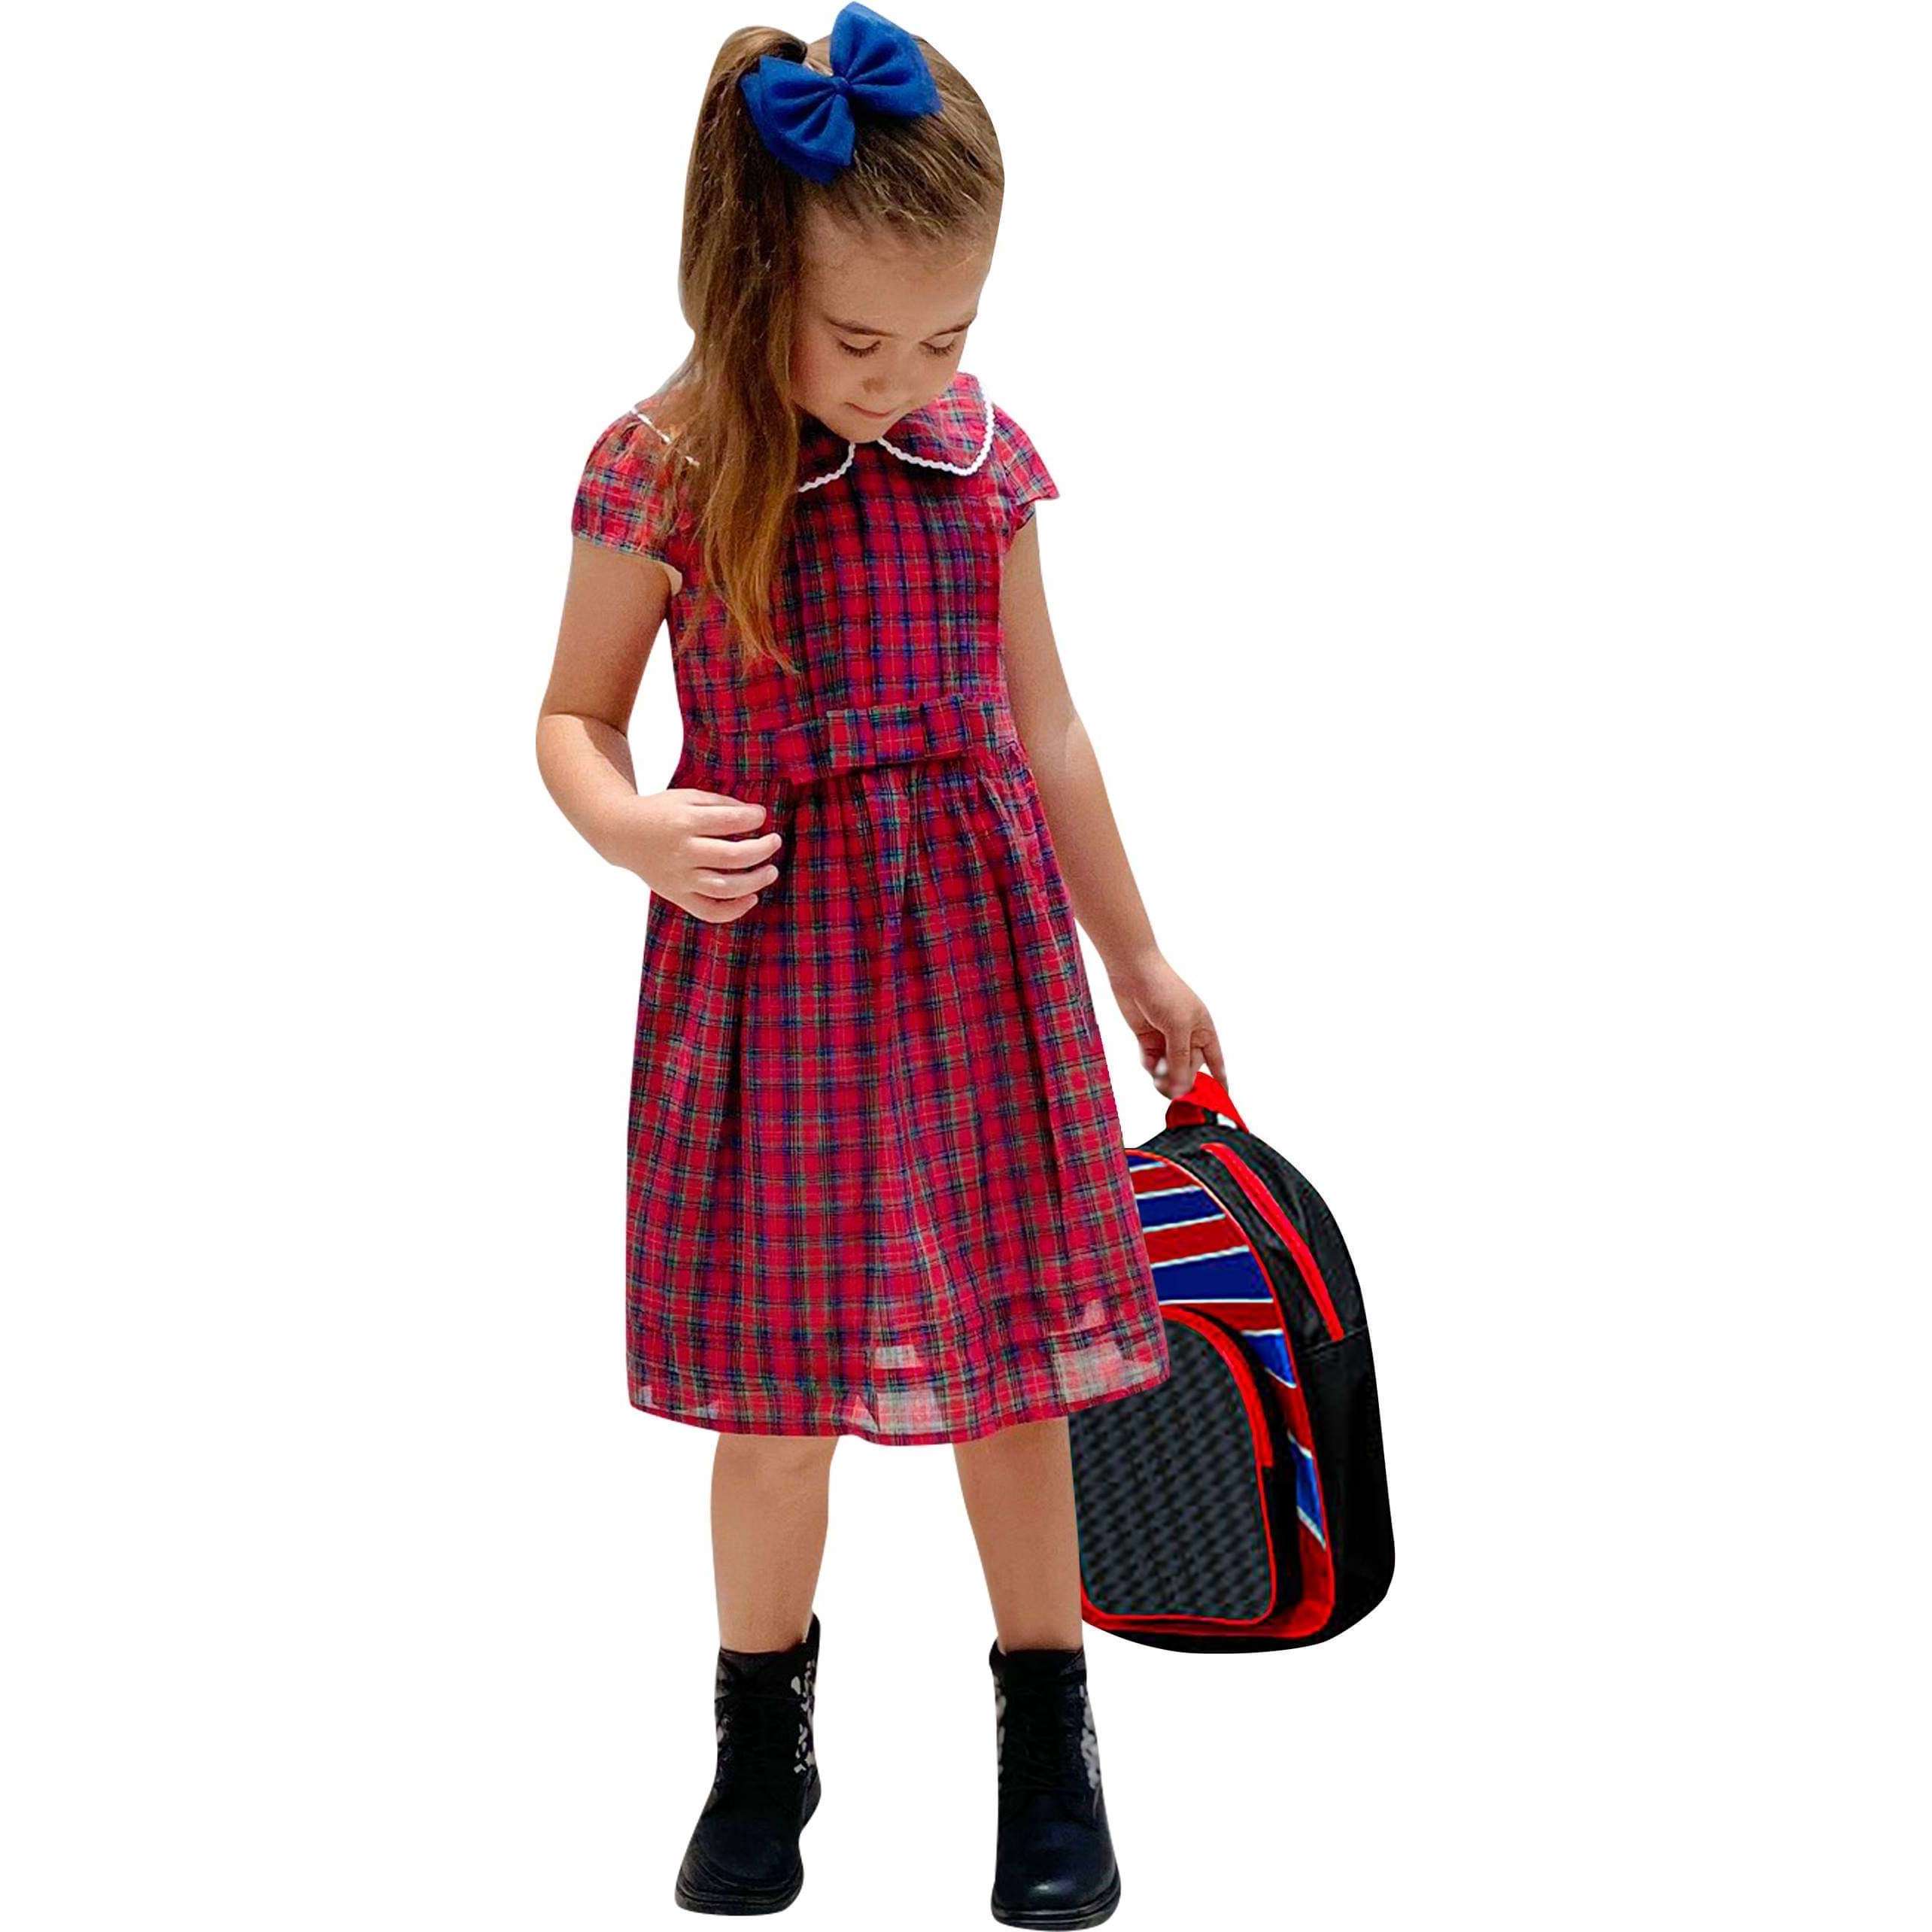 Baby Girls Back To School Classic Tartan Plaid Peter Pan Woven Cotton Dress - Red - Angeline Kids